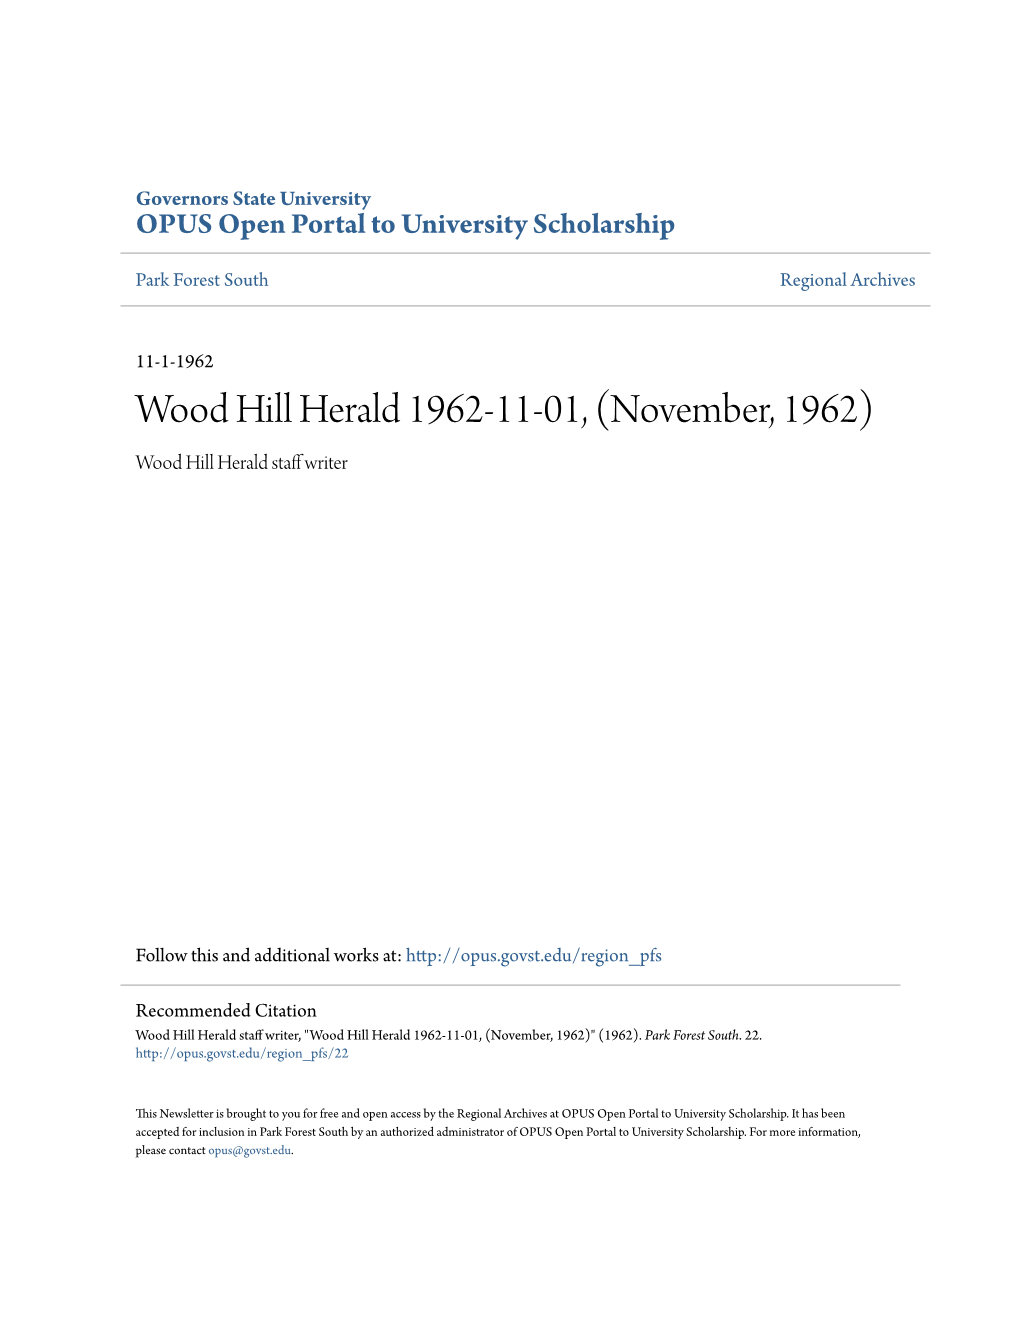 Wood Hill Herald 1962-11-01, (November, 1962) Wood Hill Herald Staff Writer